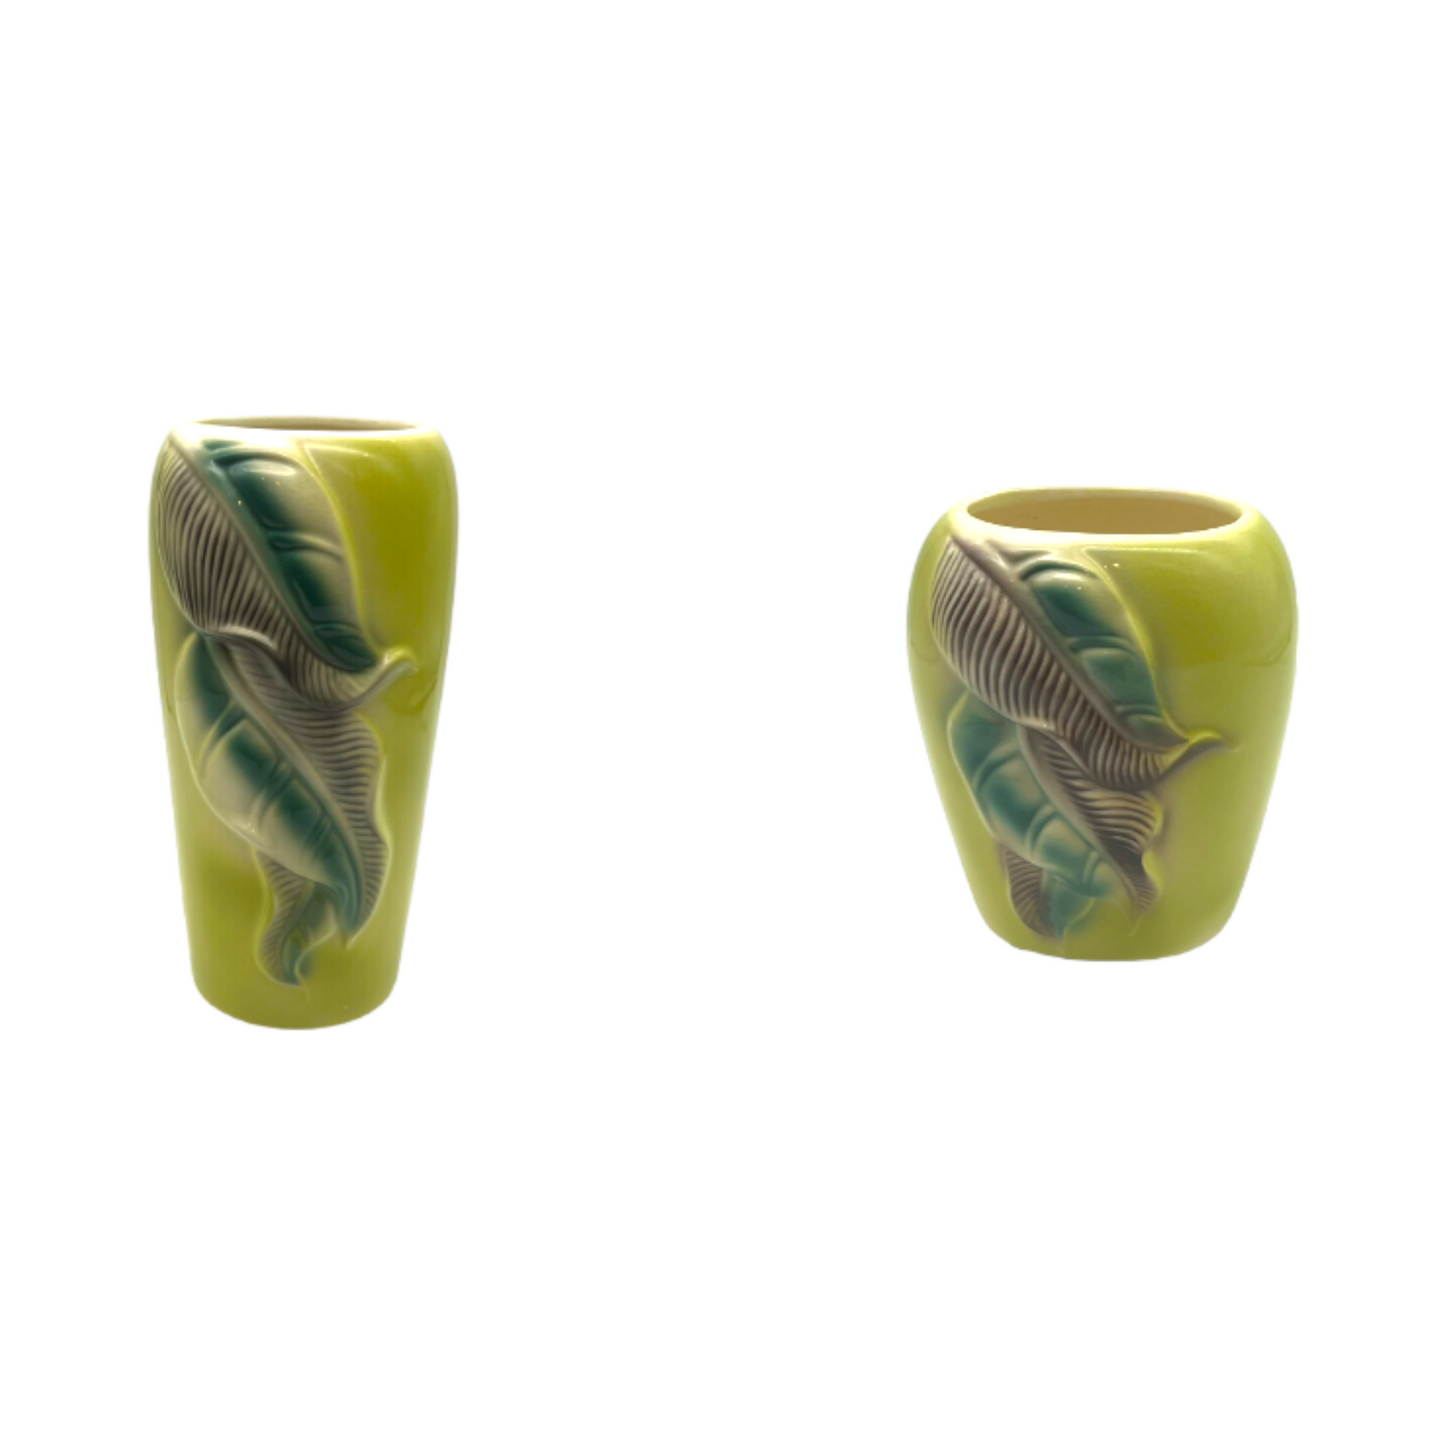 Royal Copley - Green Stylized Leaf Vase- Vintage